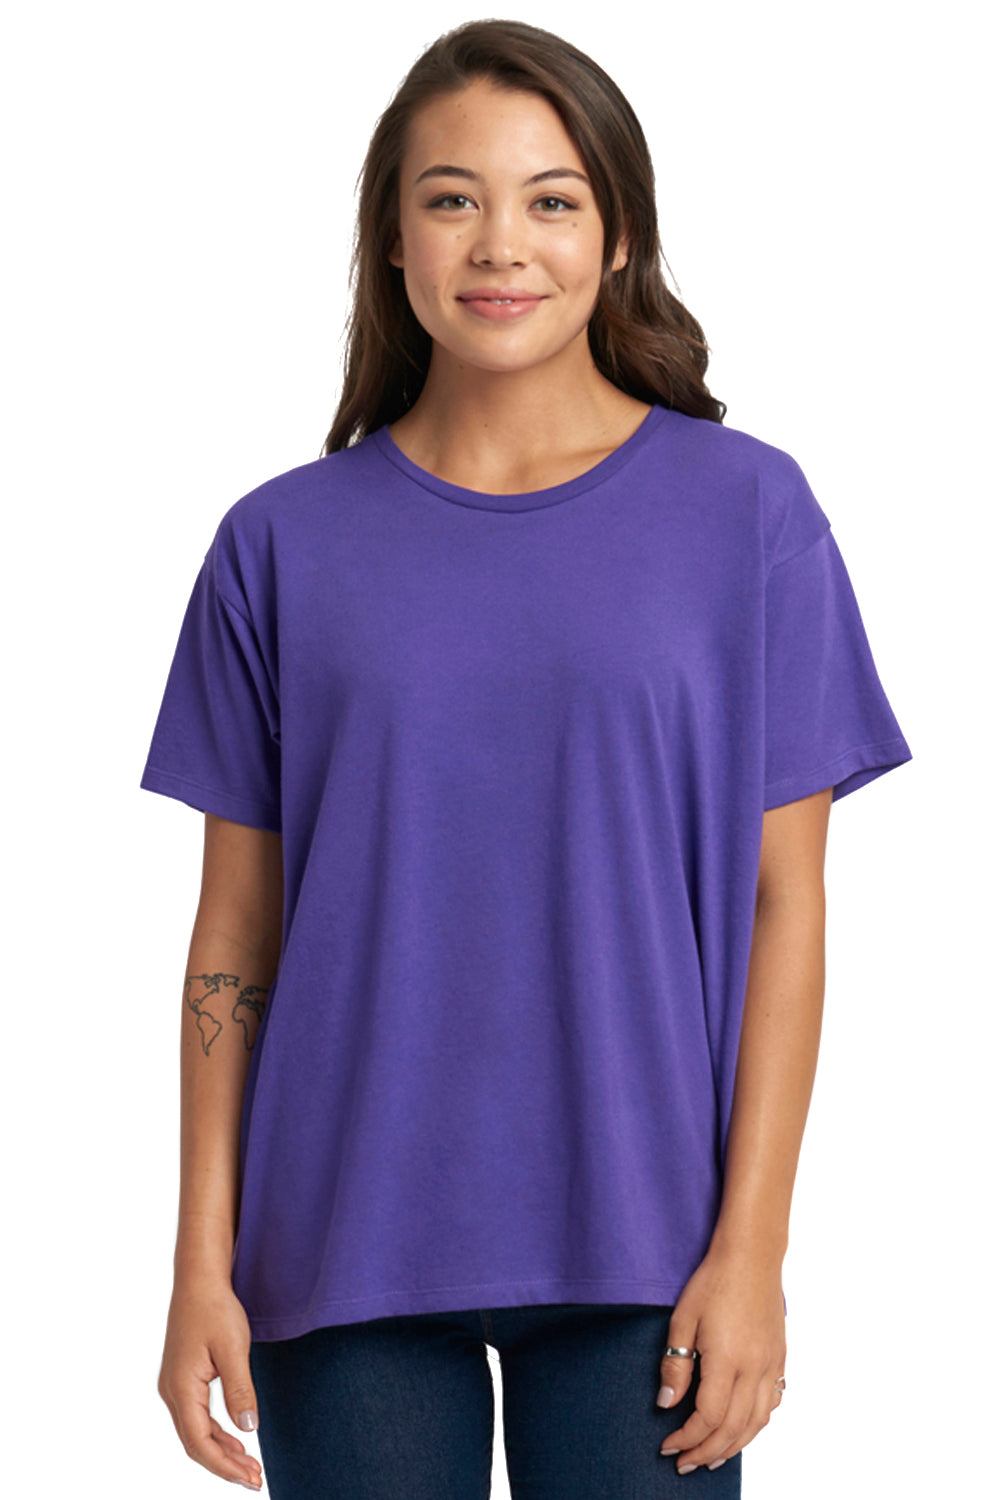 Next Level N1530 Womens Ideal Flow Short Sleeve Crewneck T-Shirt Purple Rush Front